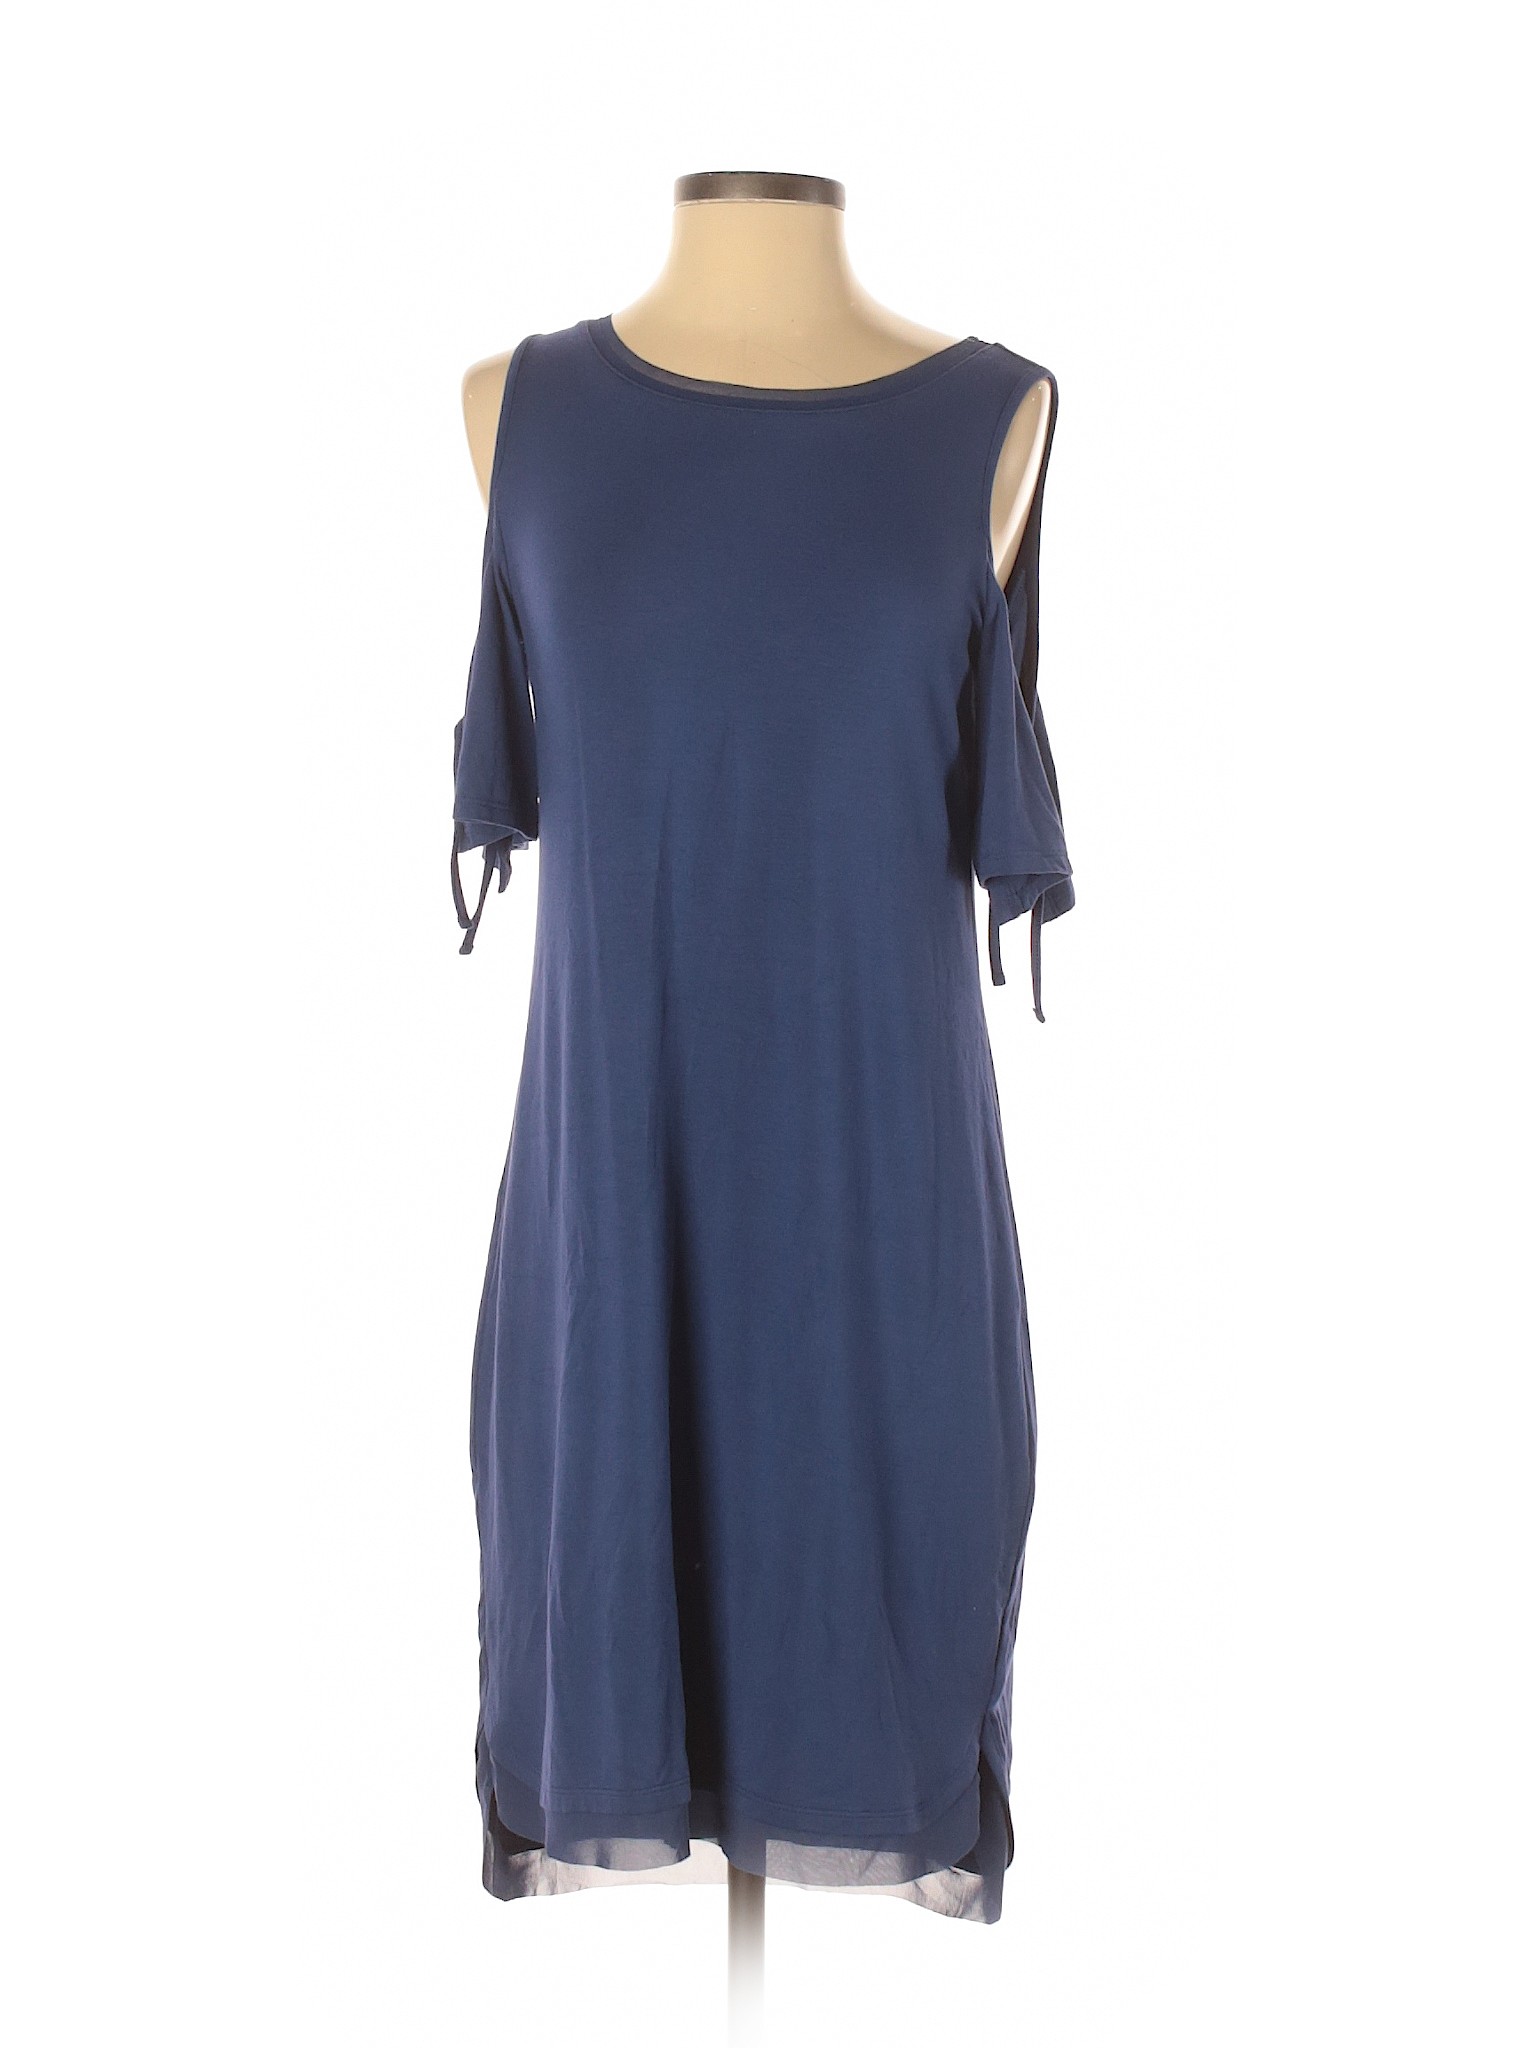 White House Black Market Women Blue Casual Dress S | eBay